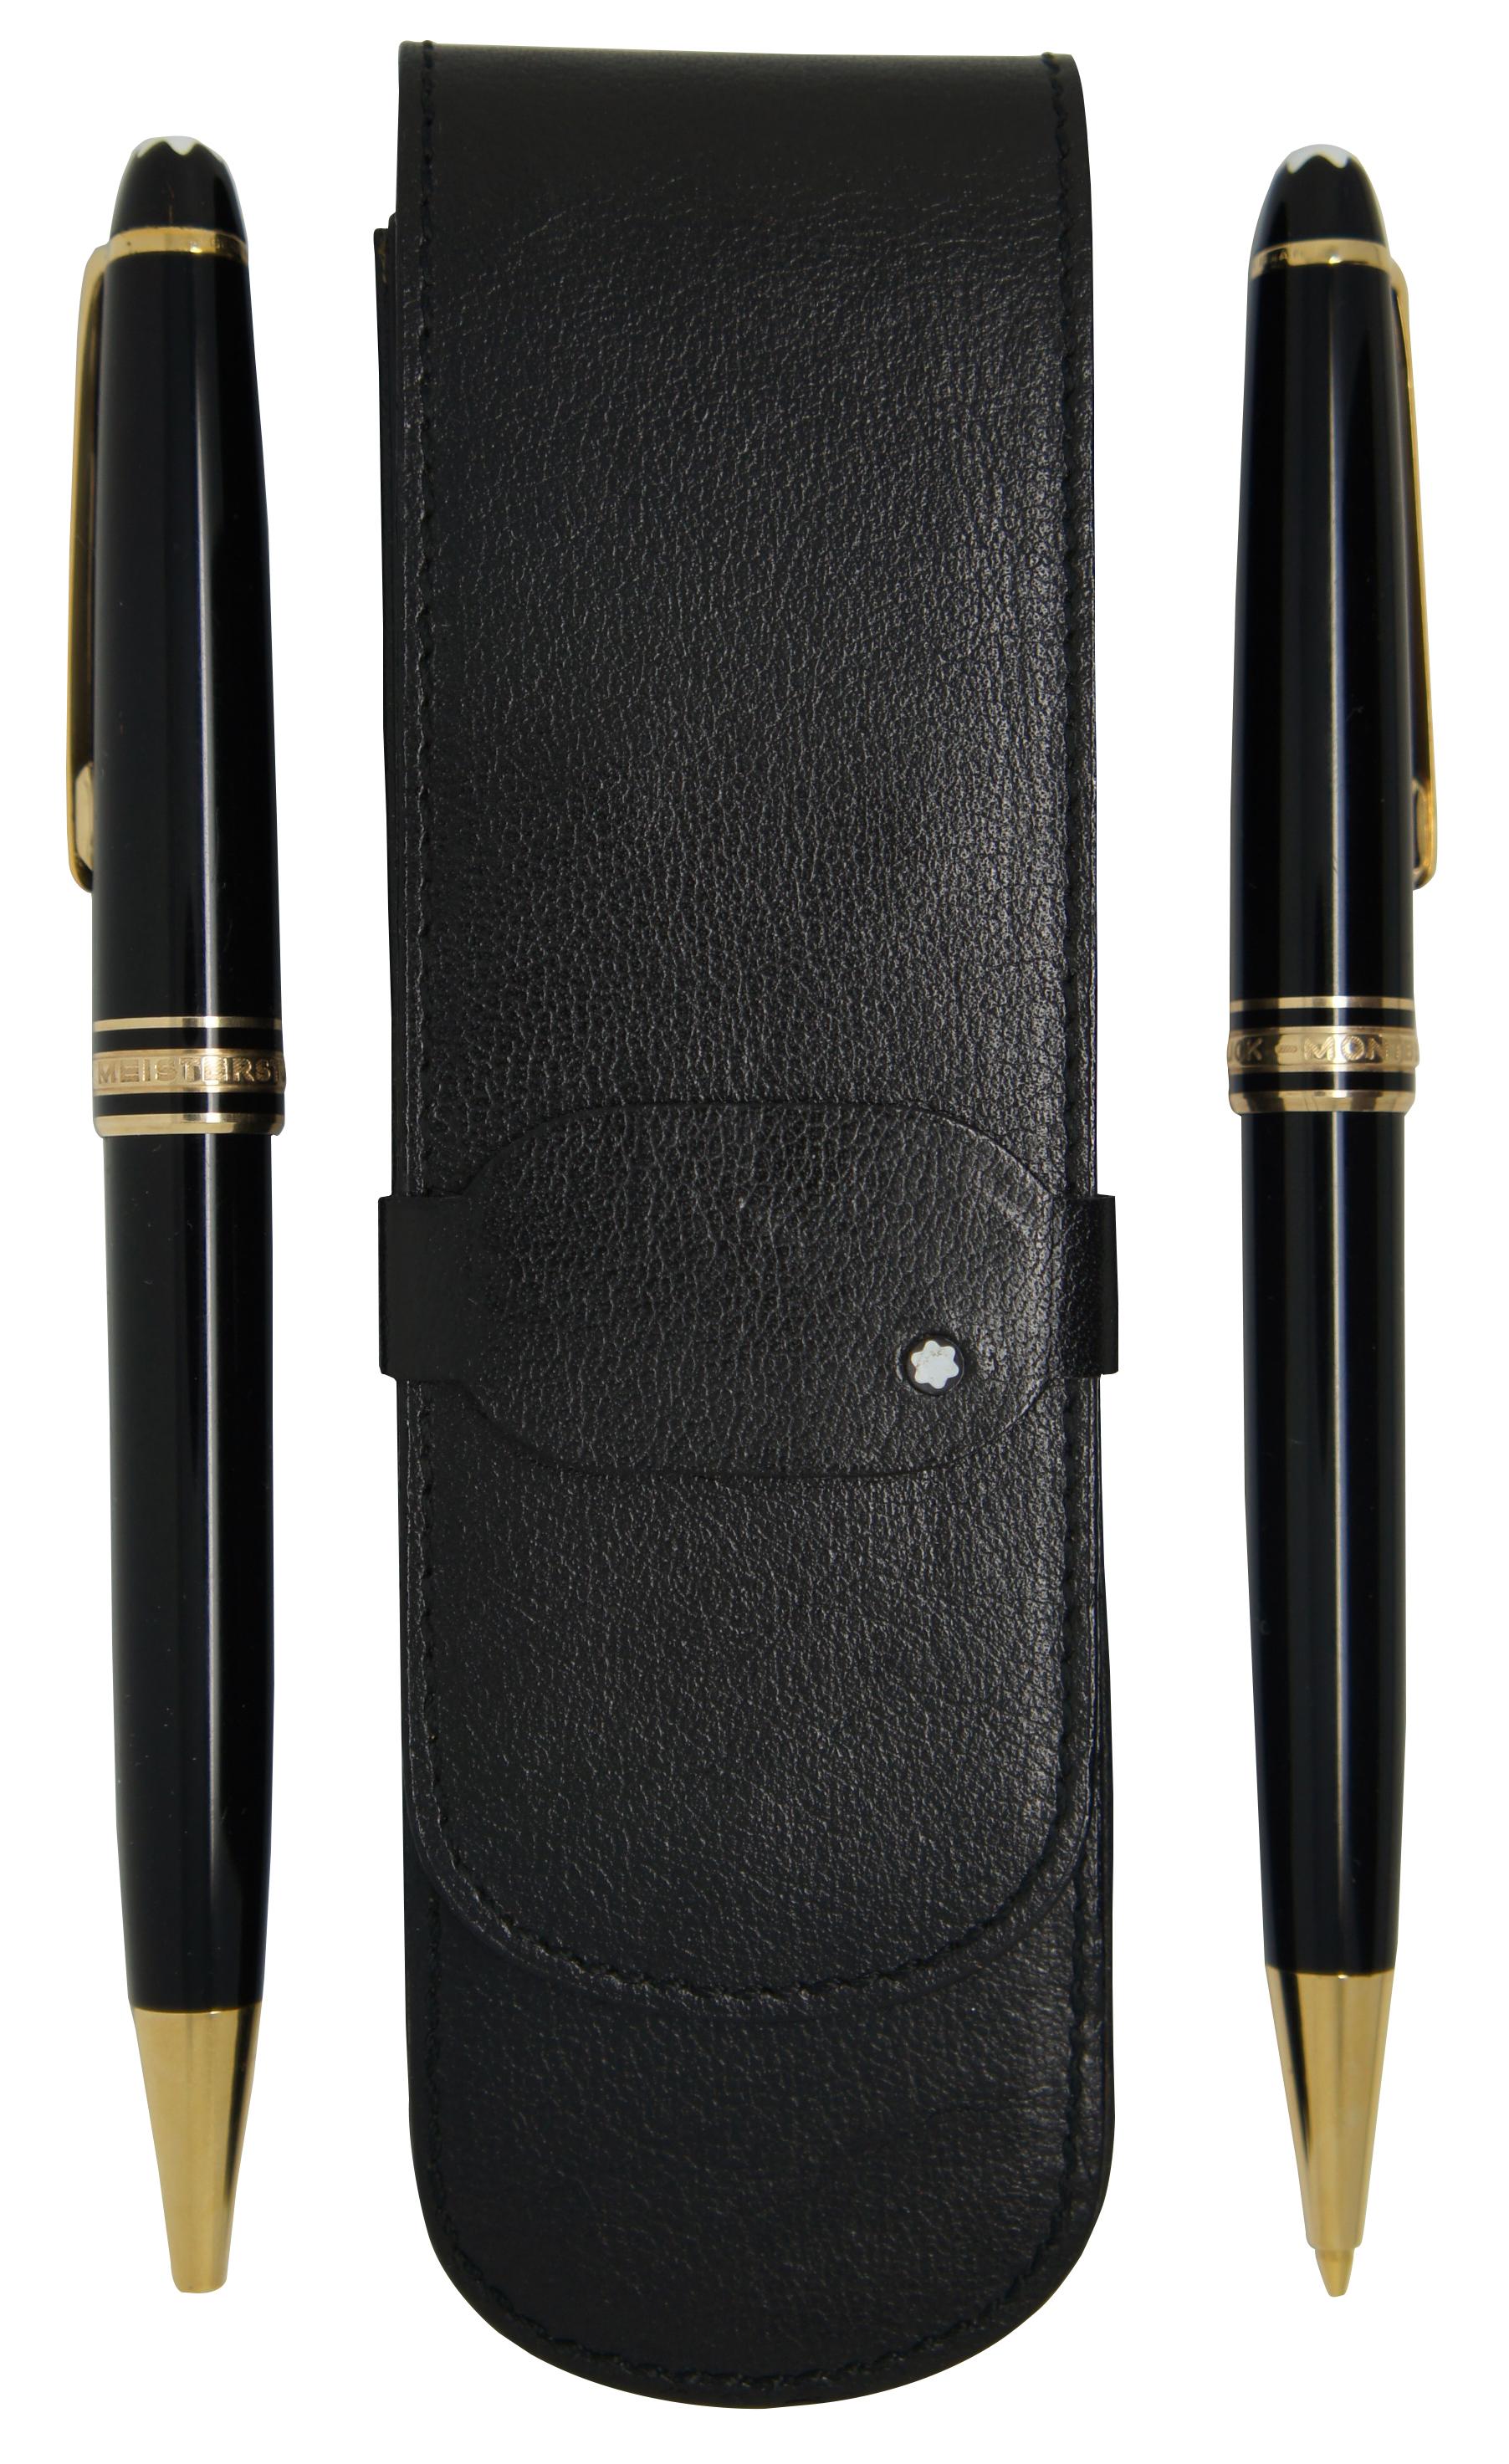 Vintage Montblanc Meisterstuck black ballpoint pen and mechanical pencil set with black leather two slot carrying case/pouch.

Measures: Case - 5.75” x 1.75” x 0.75” / Pen - 5.5” x 0.5” / Pencil - 5.5” x 0.5” (Length x Width x Depth).